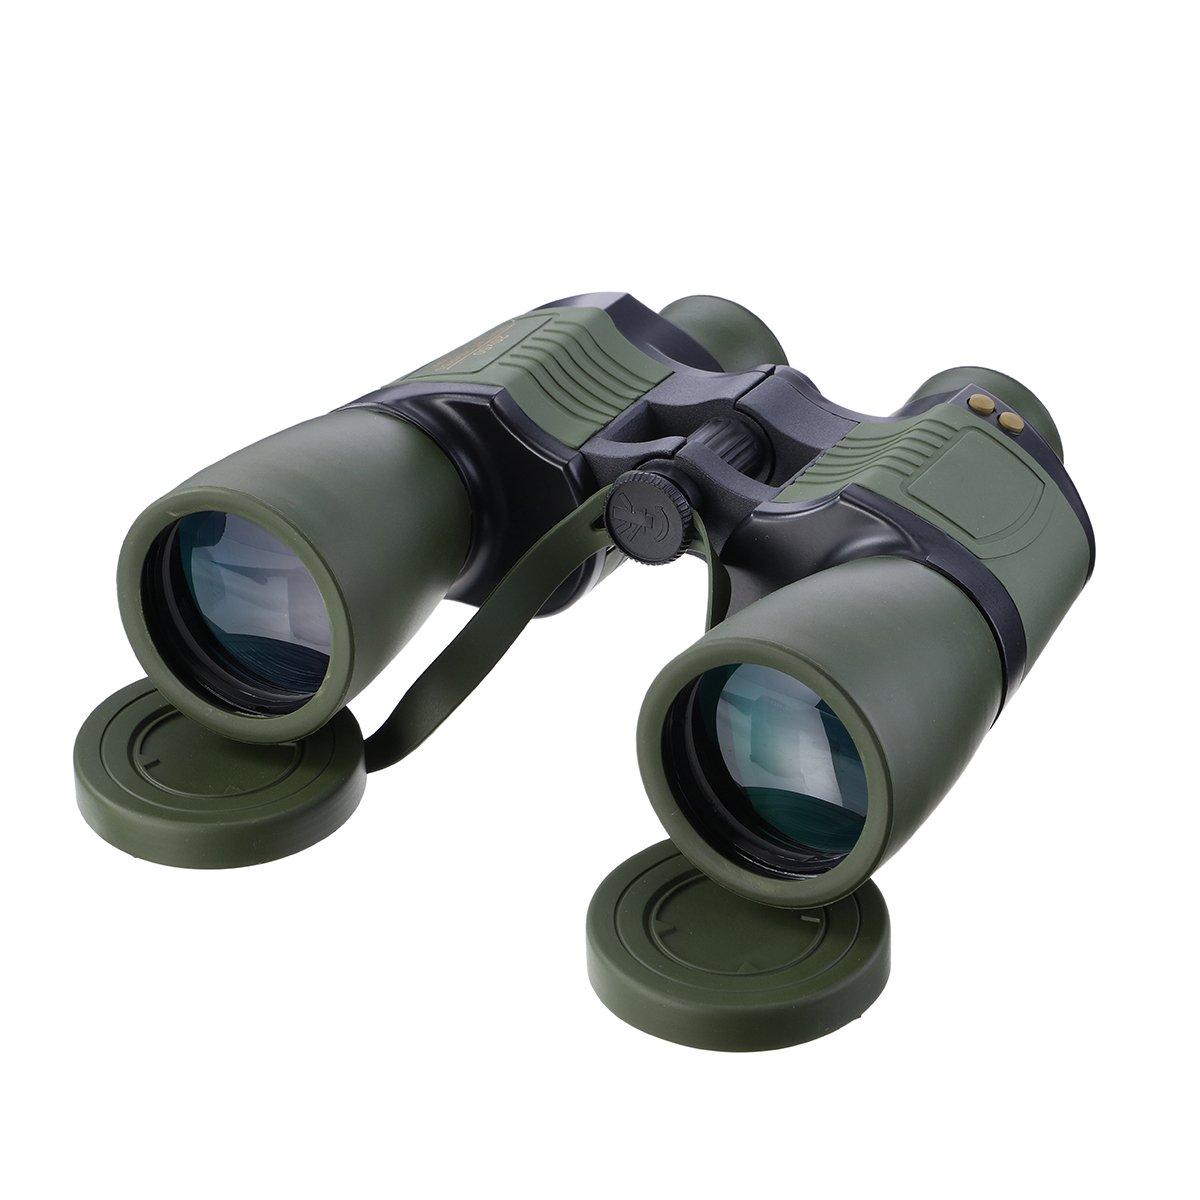 IPRee® 20x50 Professional Binocular Tactical Army Army Telescope Travel Travel